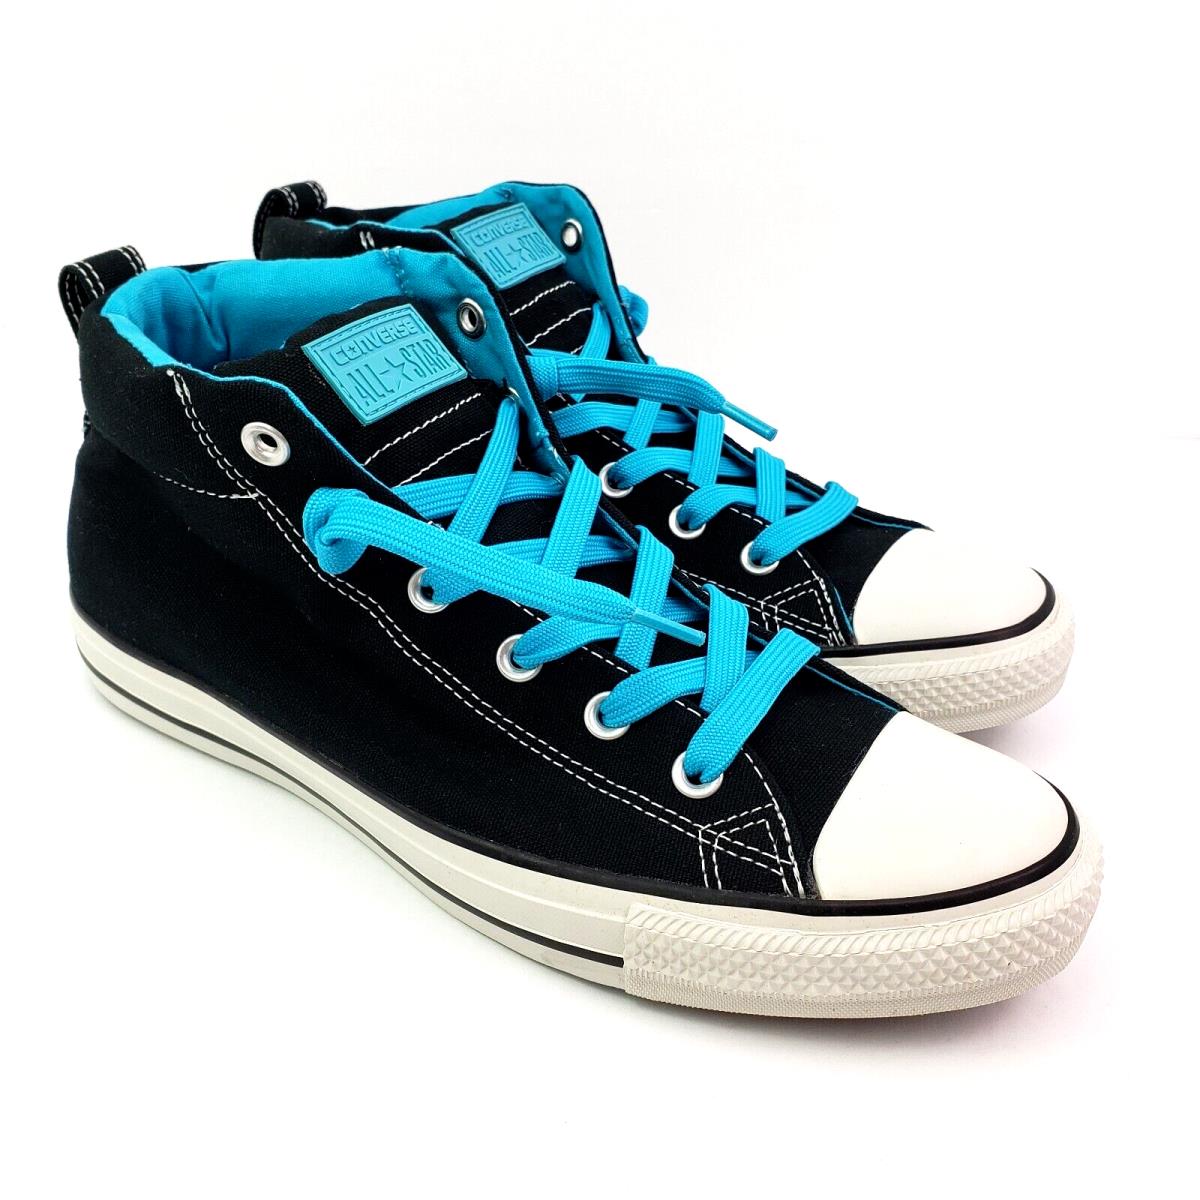 Converse Chuck Taylor Street Mid Mens Sz 8.5 Black Canvas Sneaker Shoes 142327C